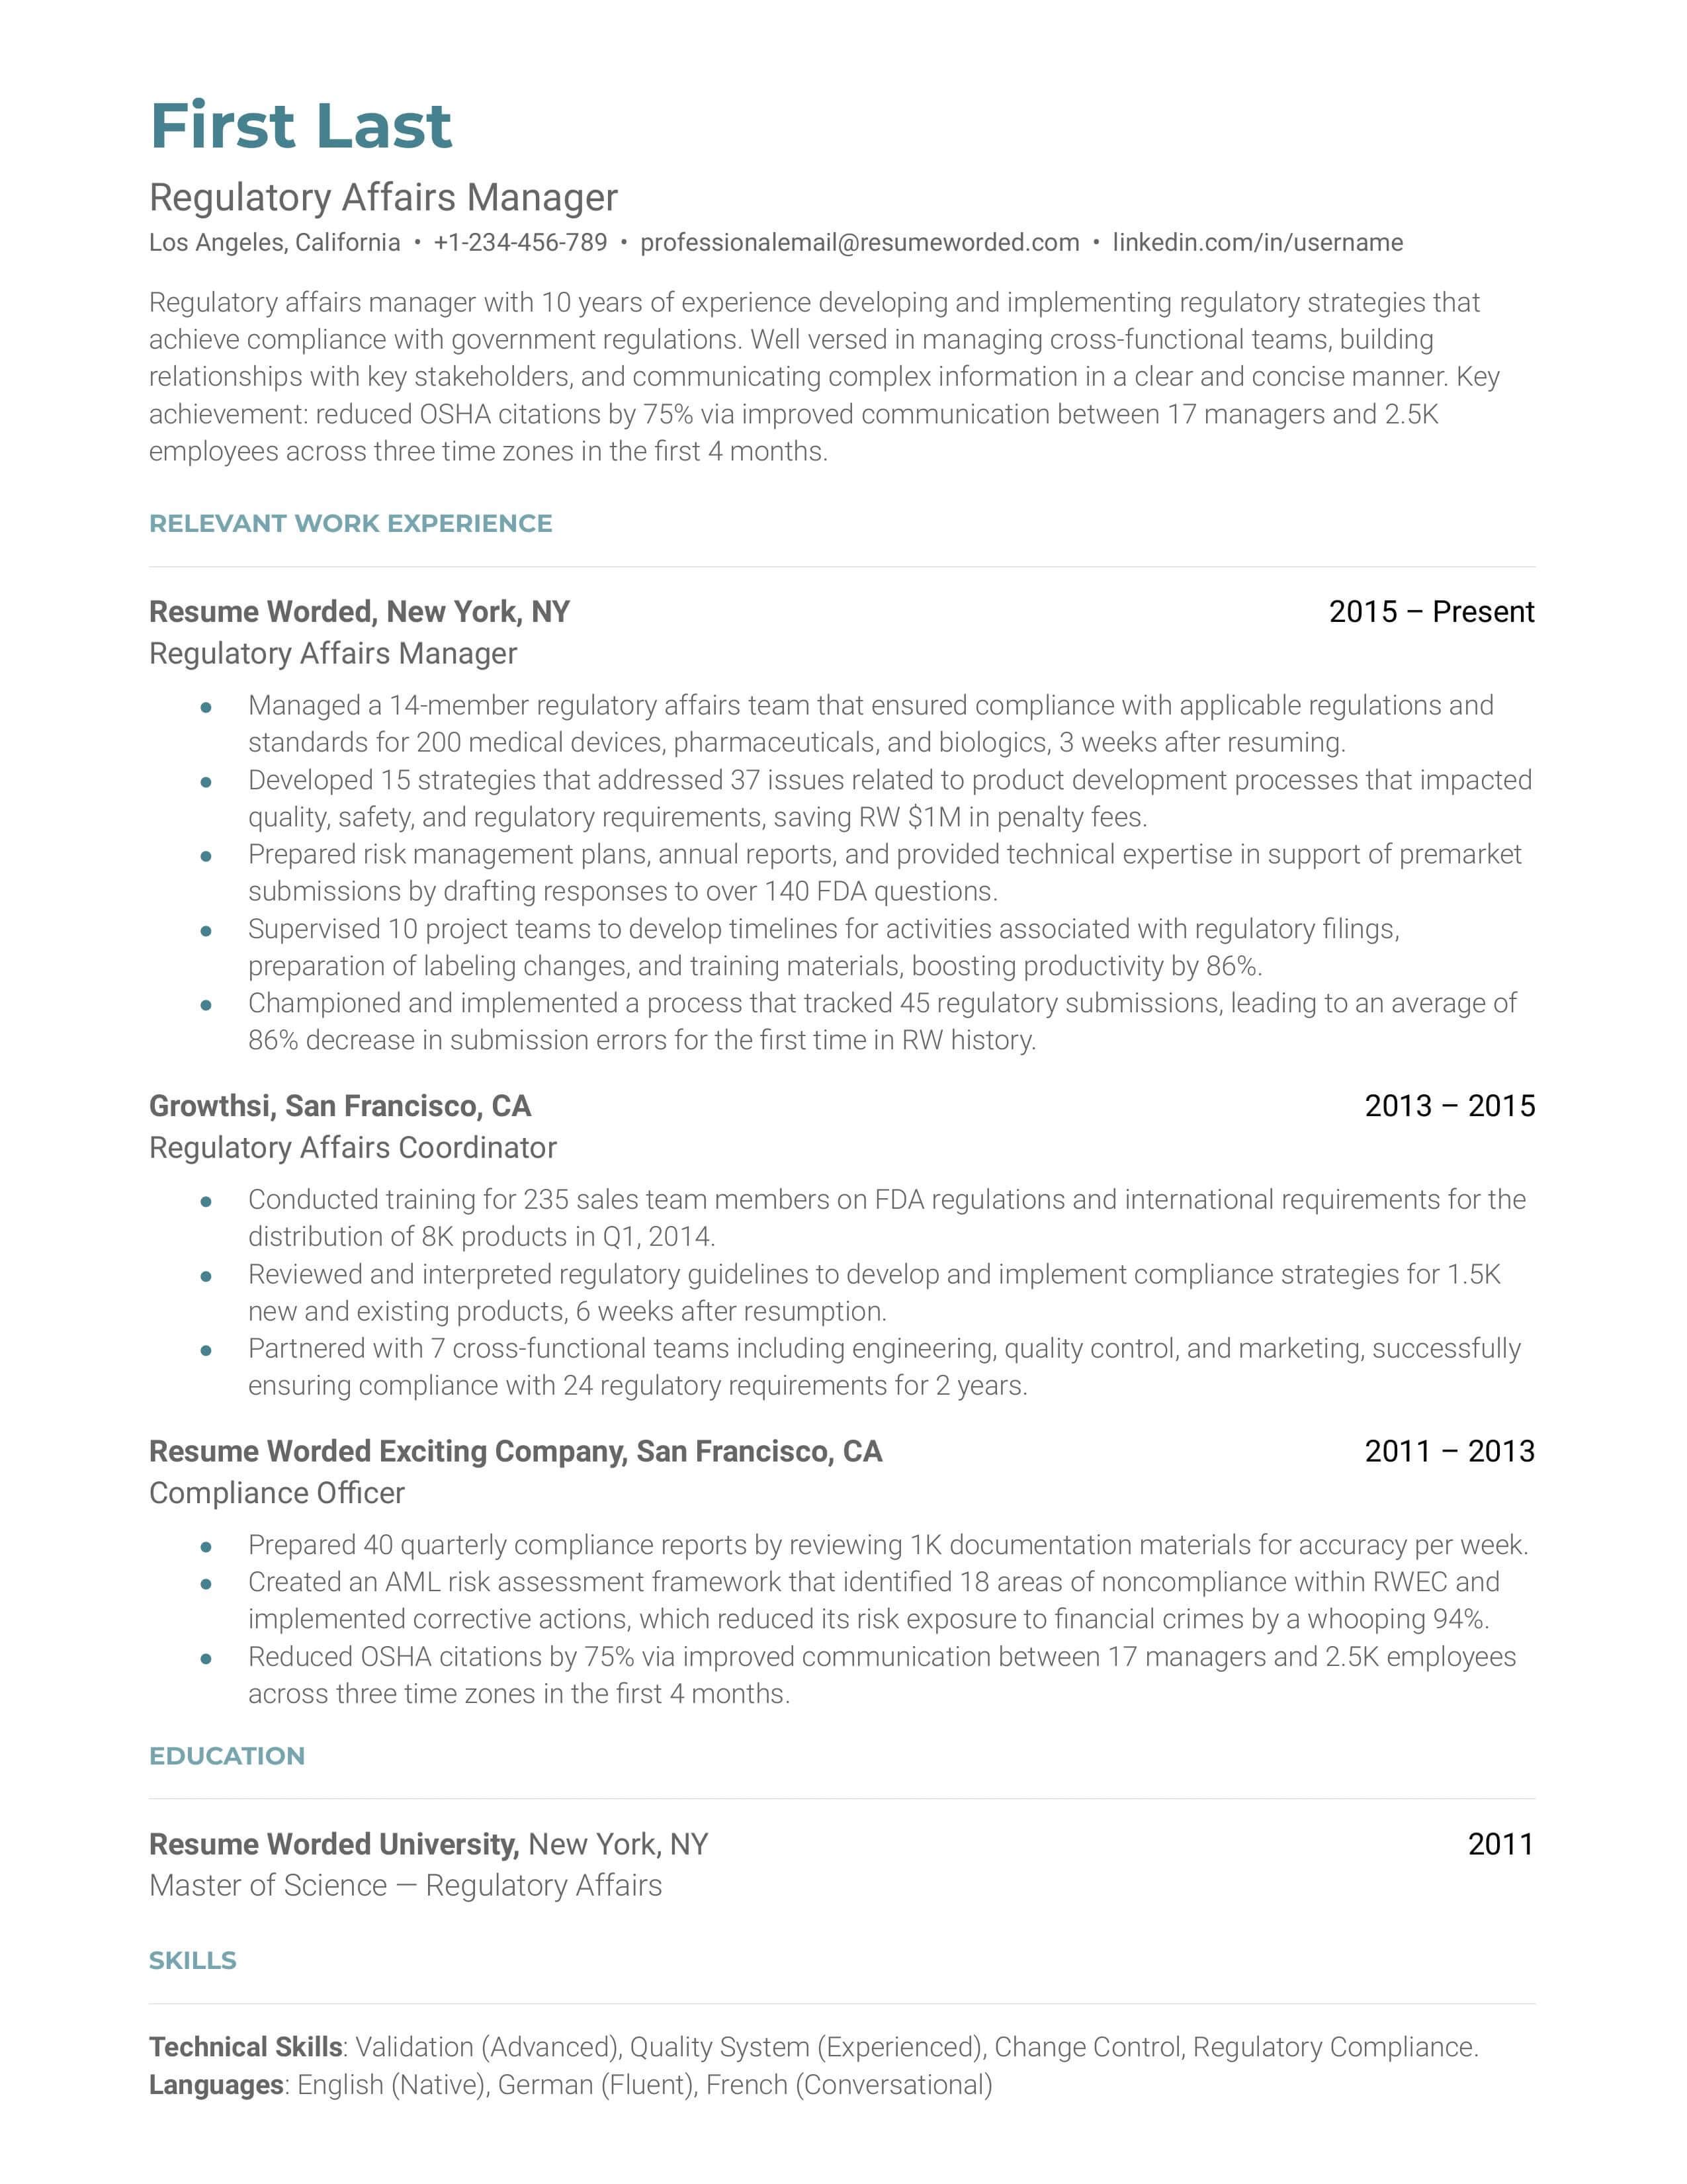 CV screenshot displaying a Regulatory Affairs Manager's strategic planning skills and regulatory knowledge.